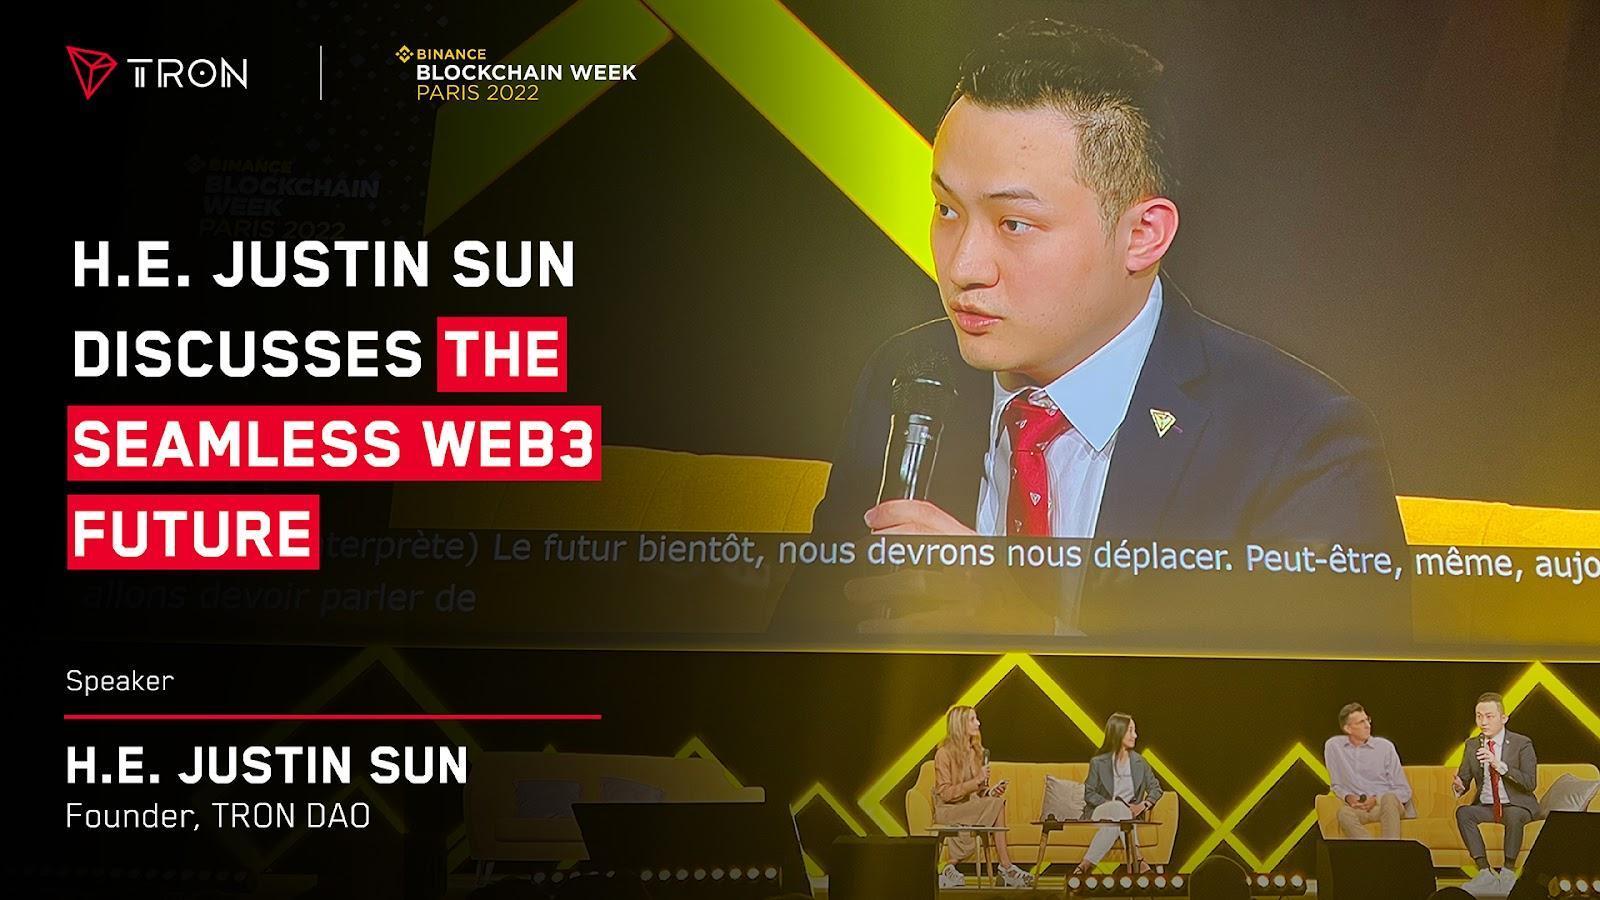 H.E. Justin Sun Discusses the Seamless Web3 Future